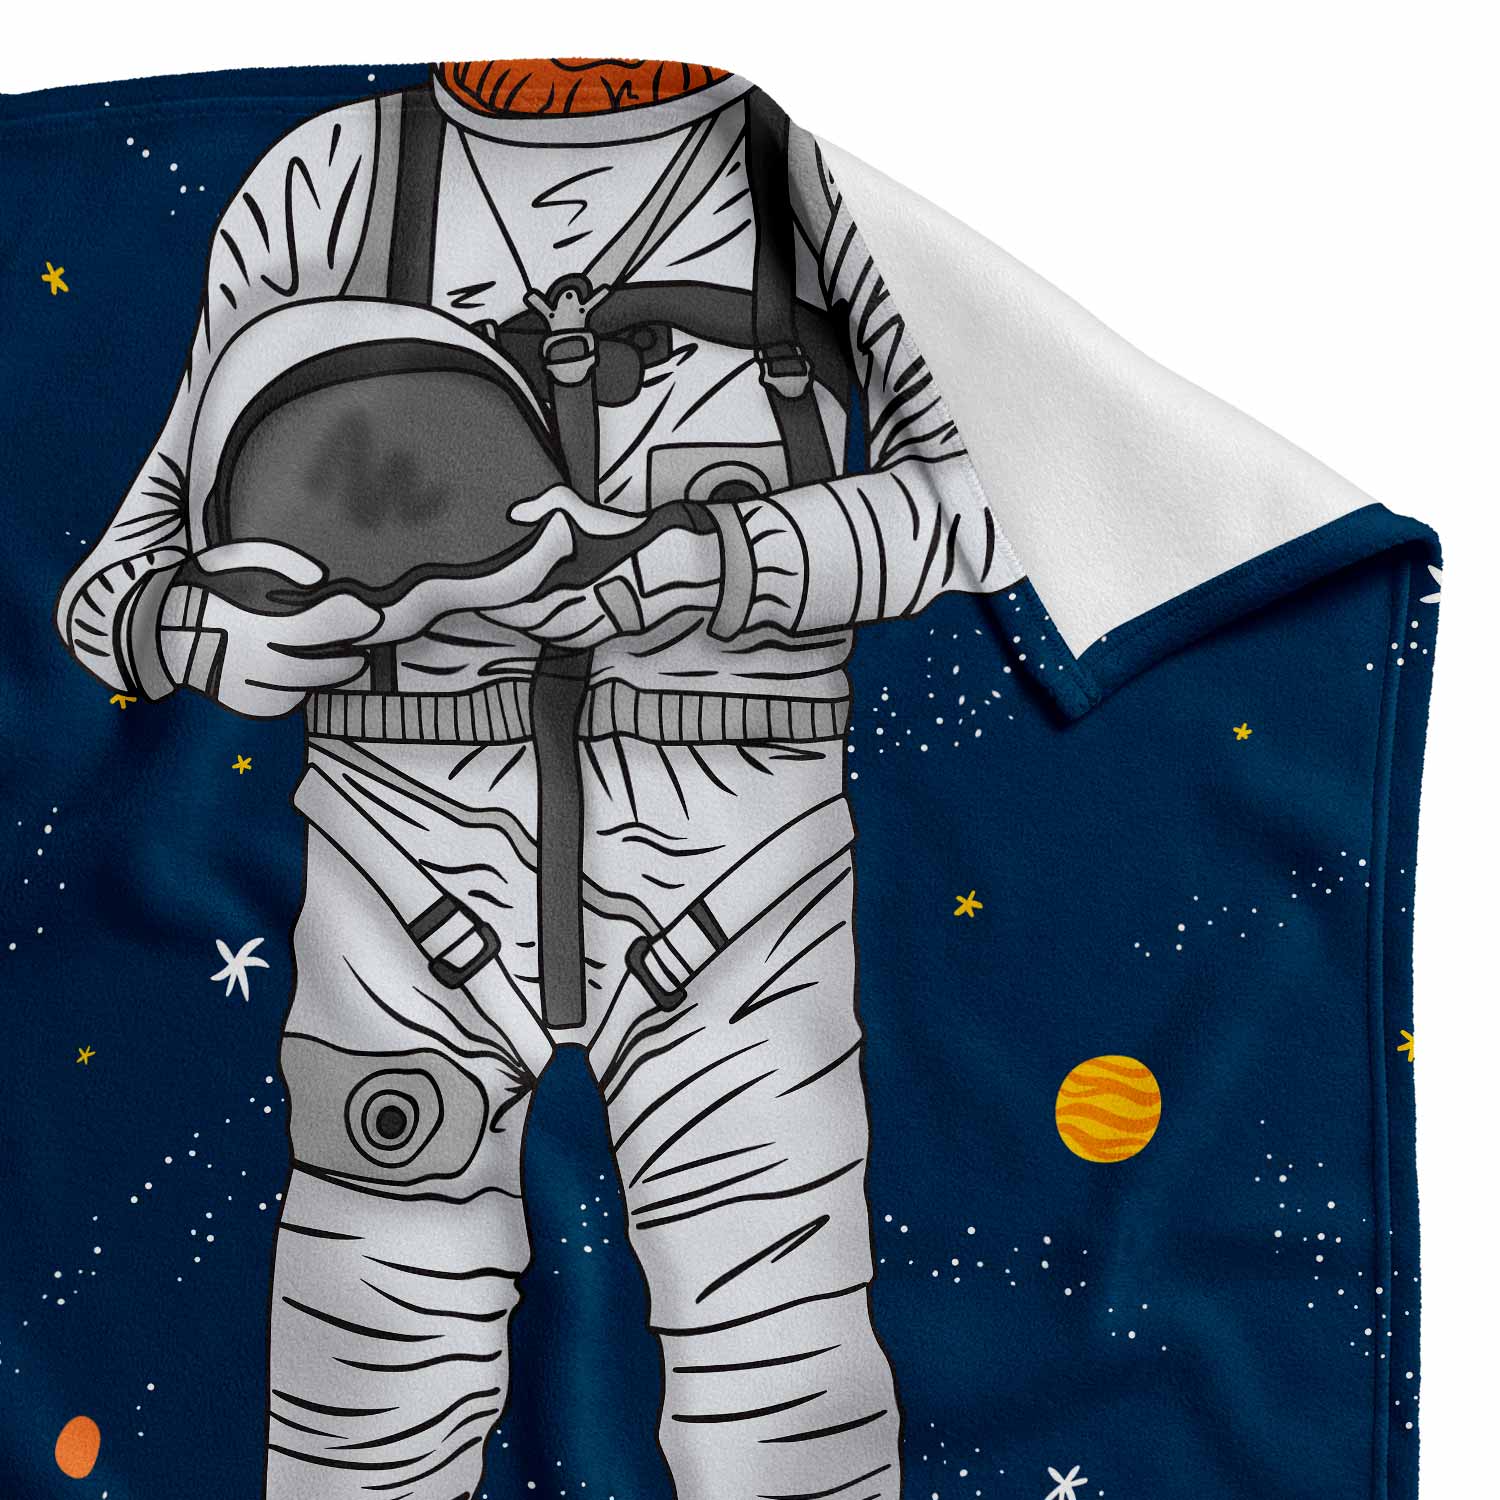 Astronaut Personalised Blanket